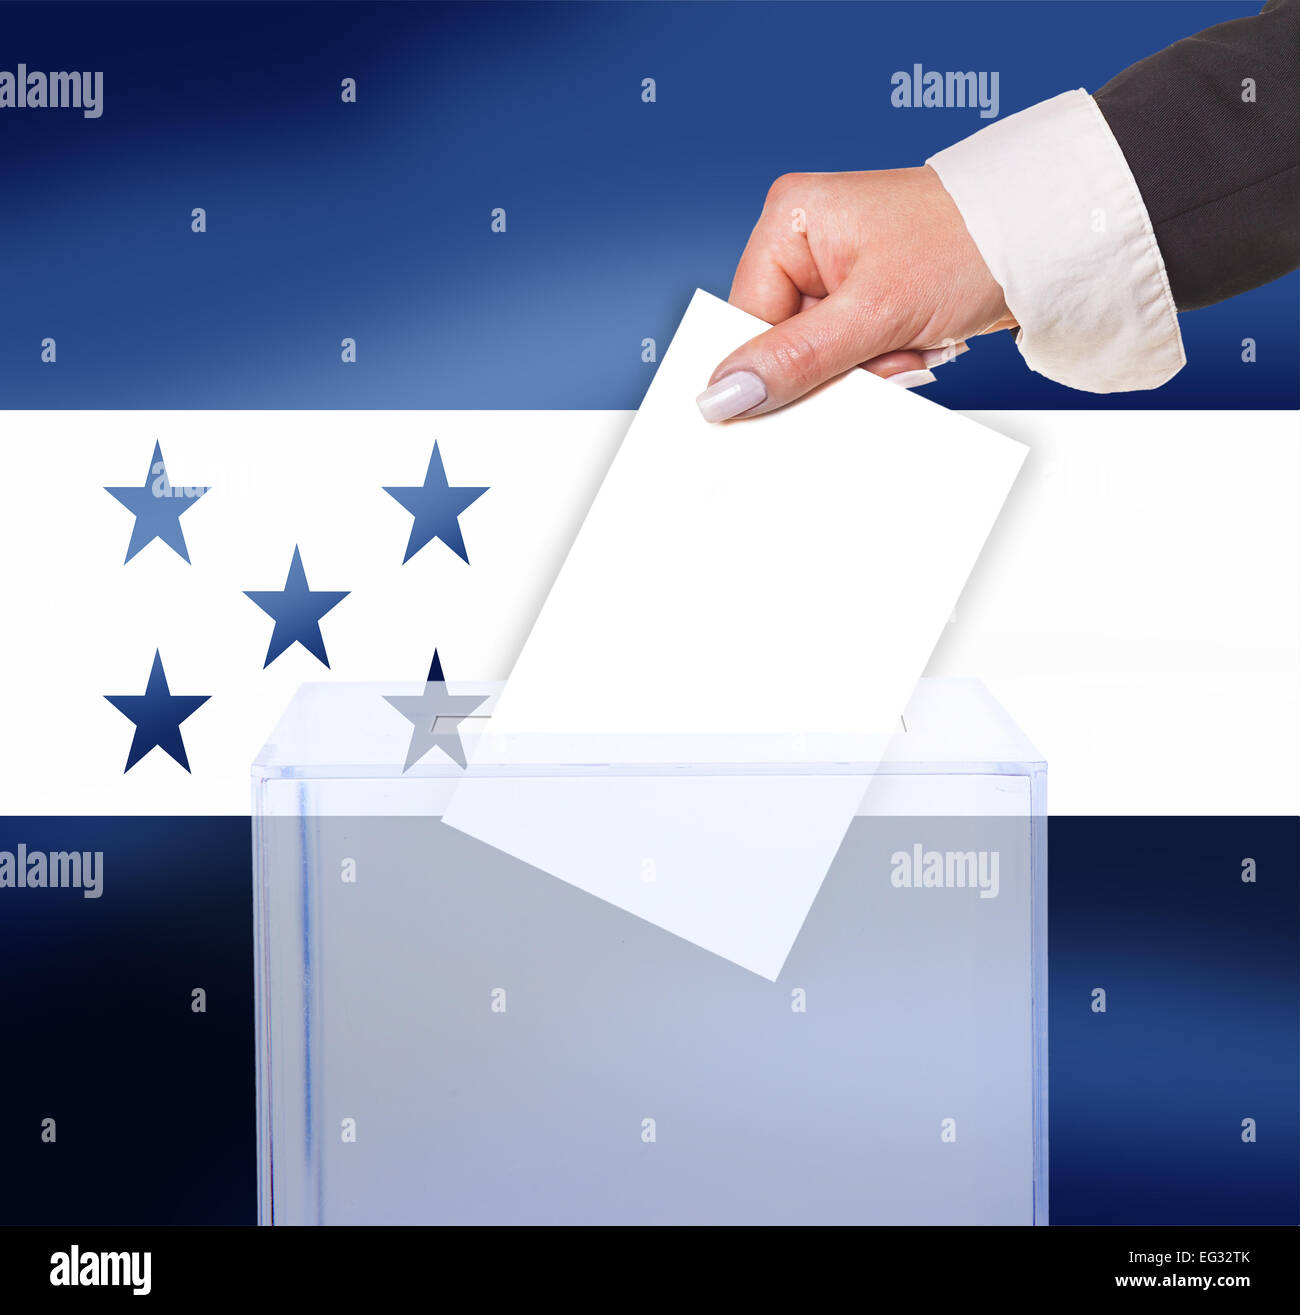 electoral vote by ballot, under the Honduras flag Stock Photo